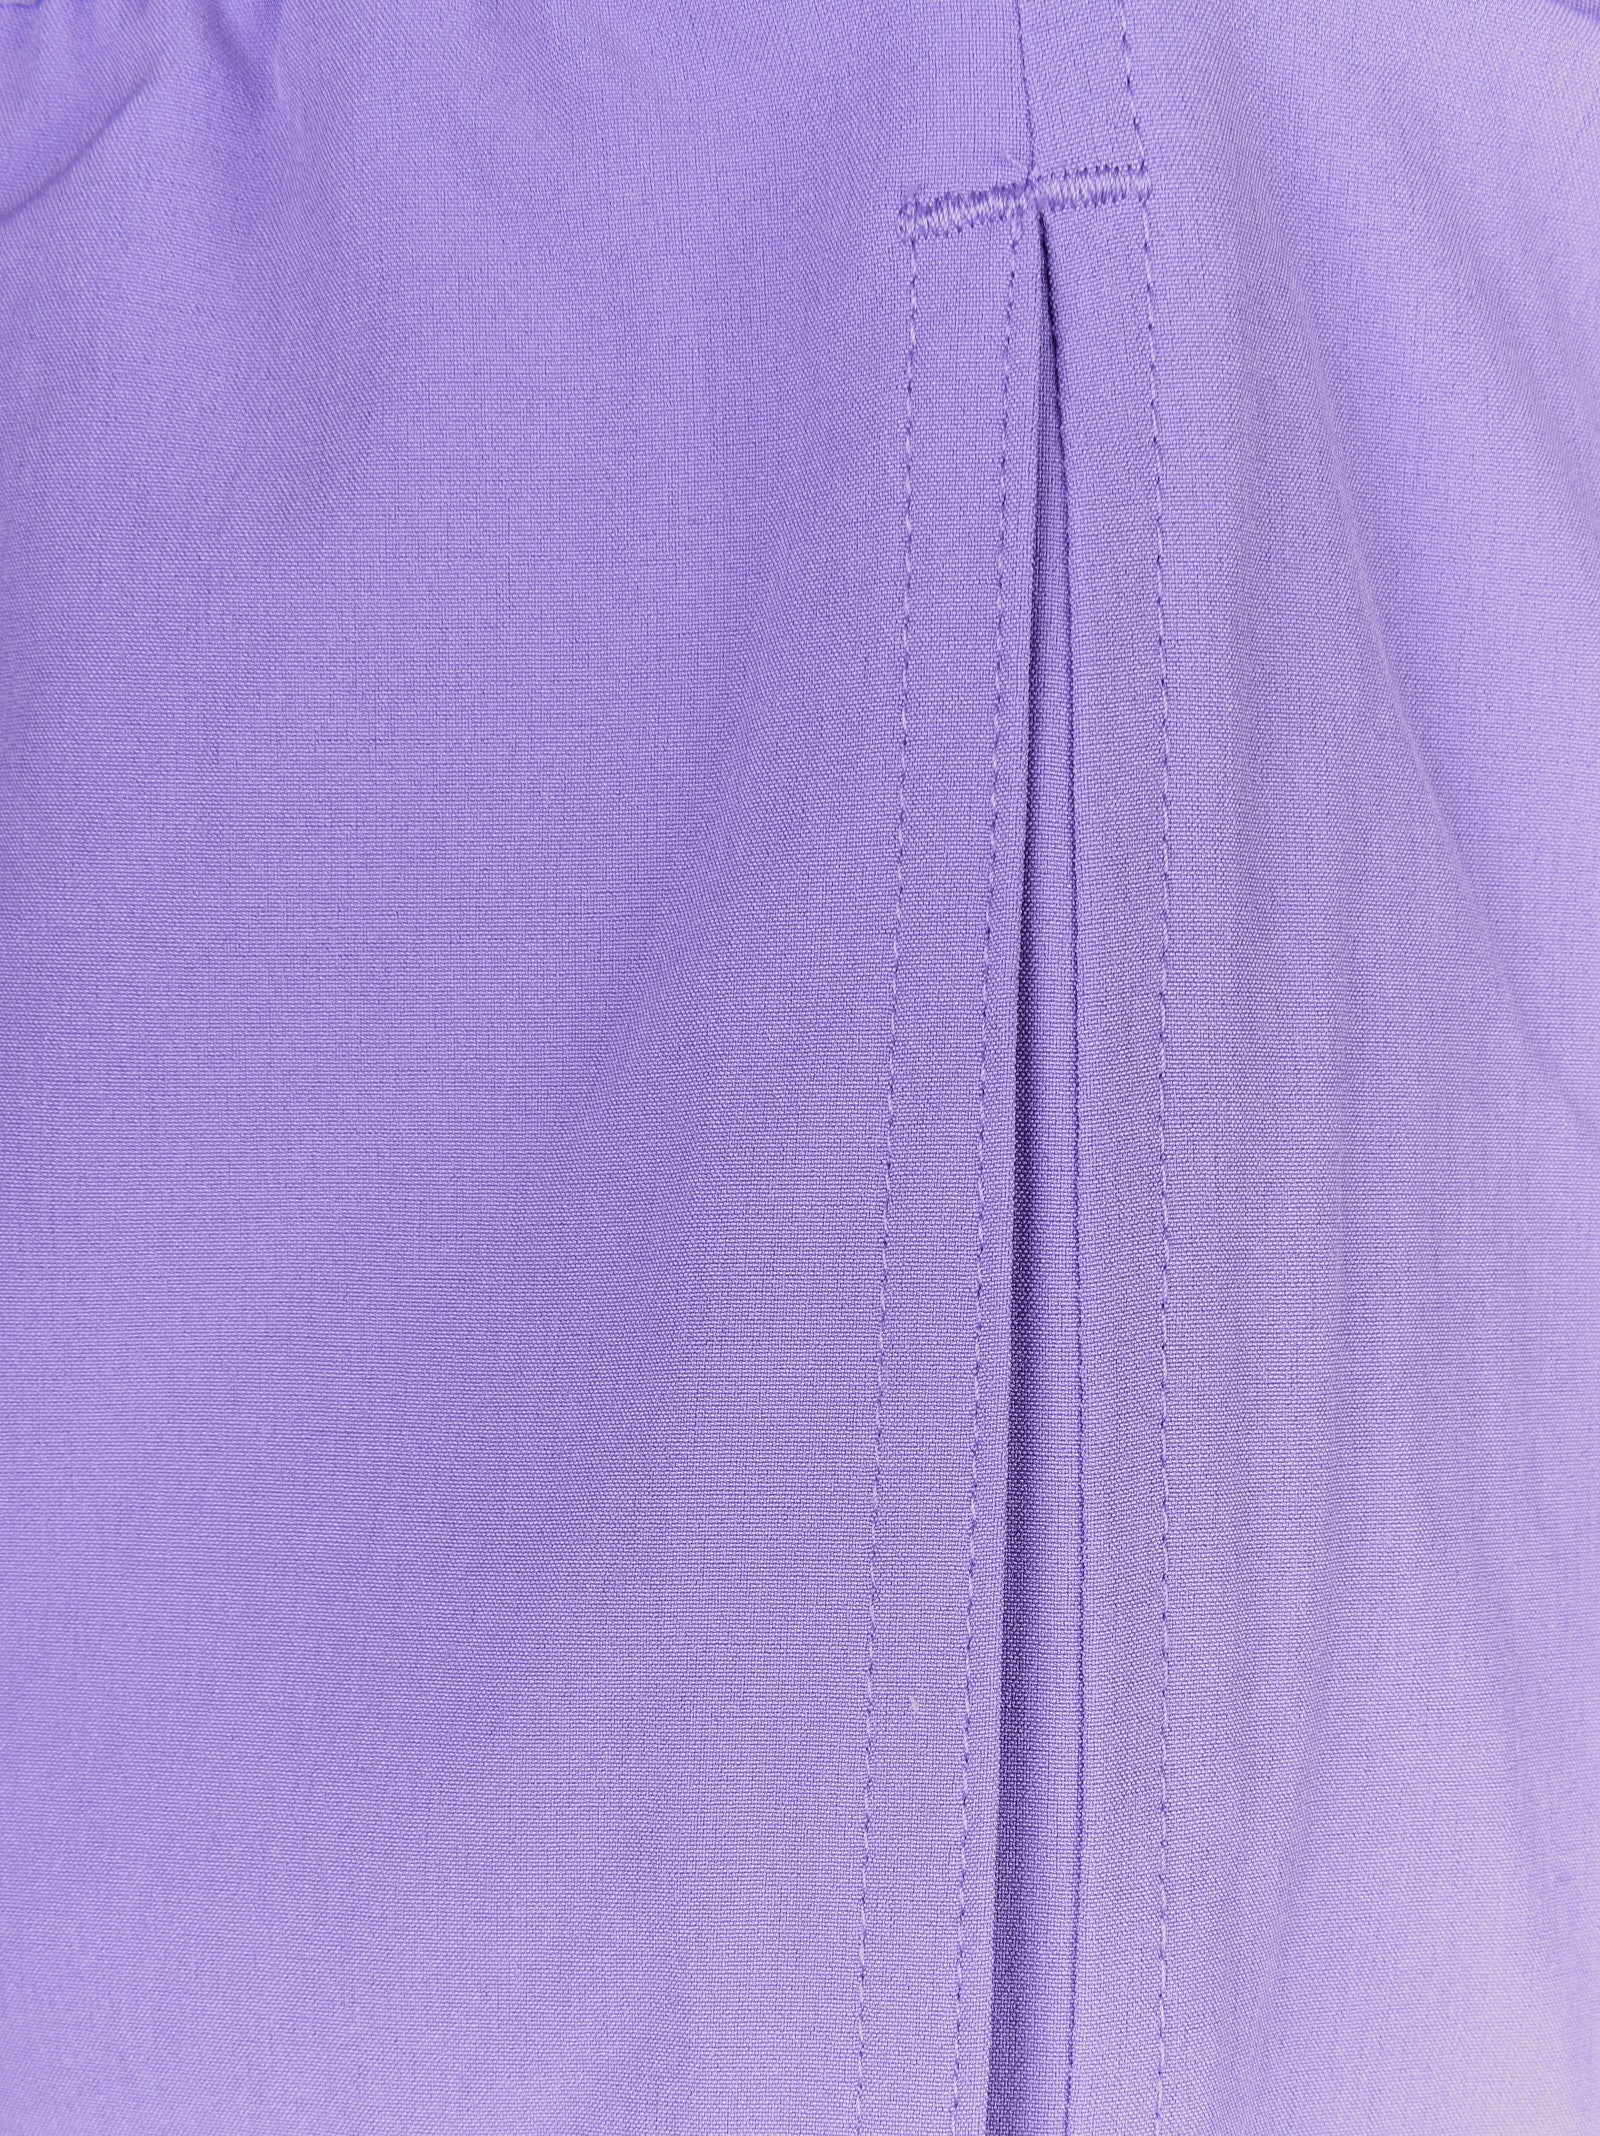 Costume POLO RALPH LAUREN
Purple martin